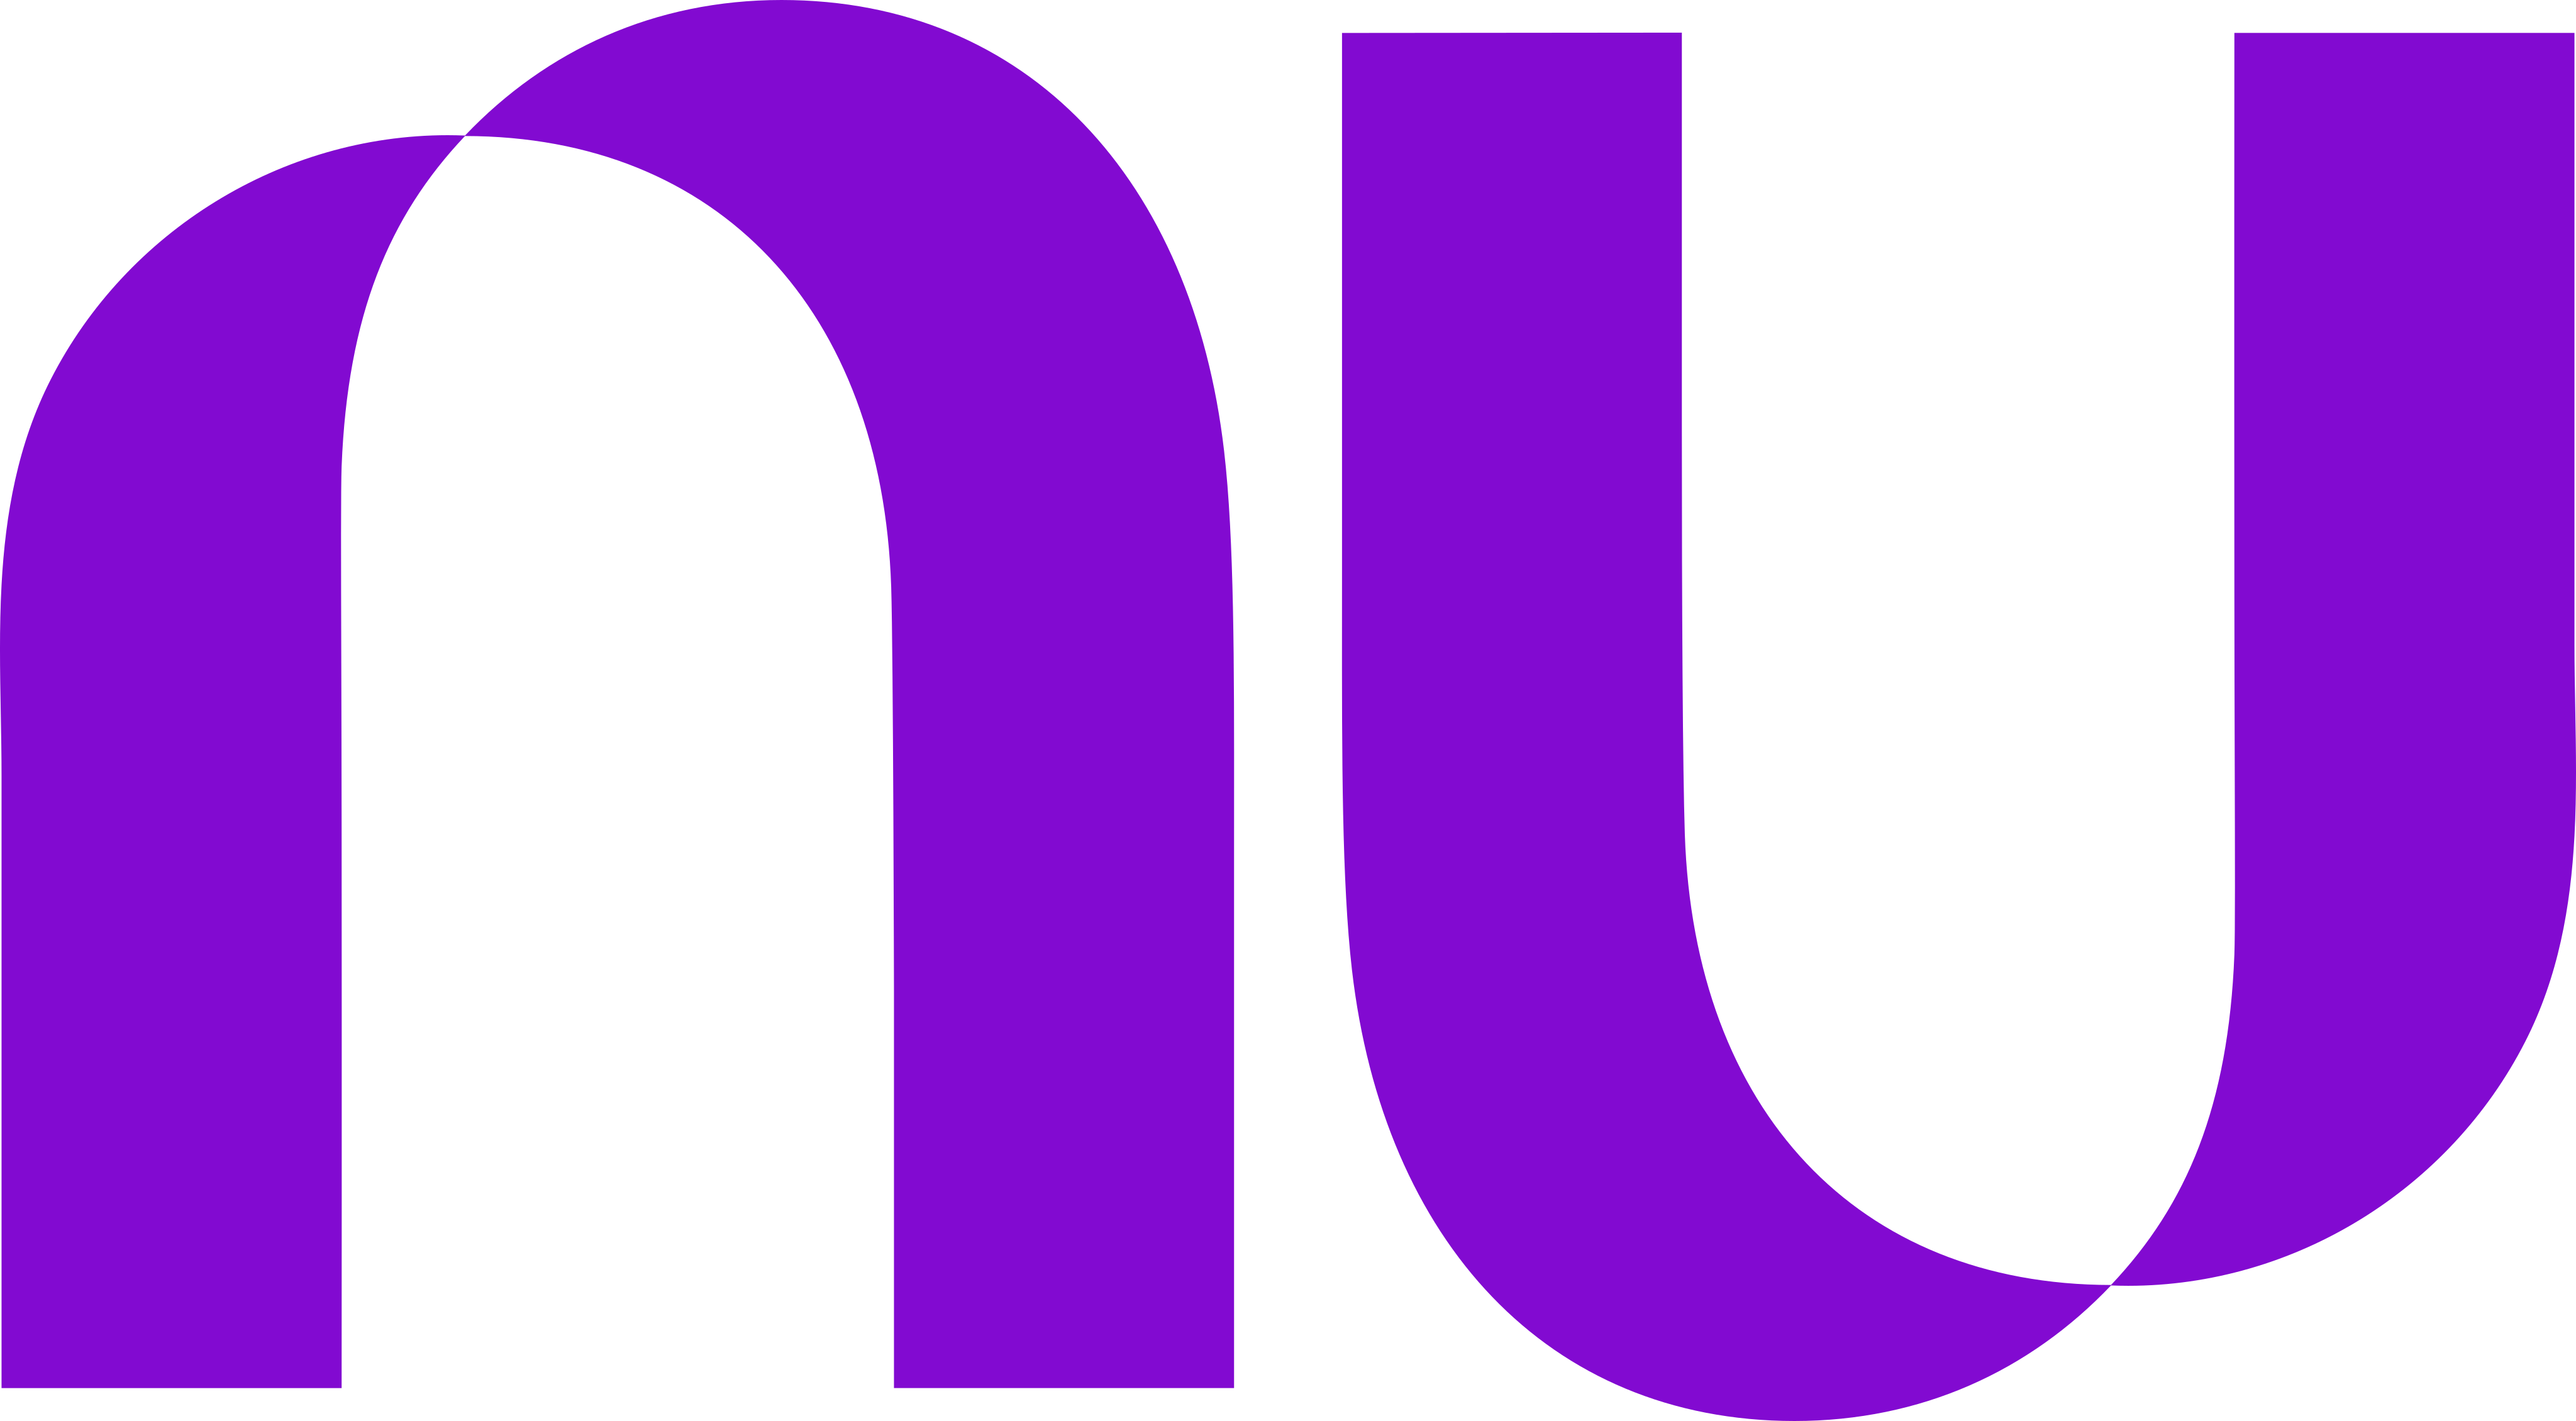 nubank logo 1 1 - Nubank Logo